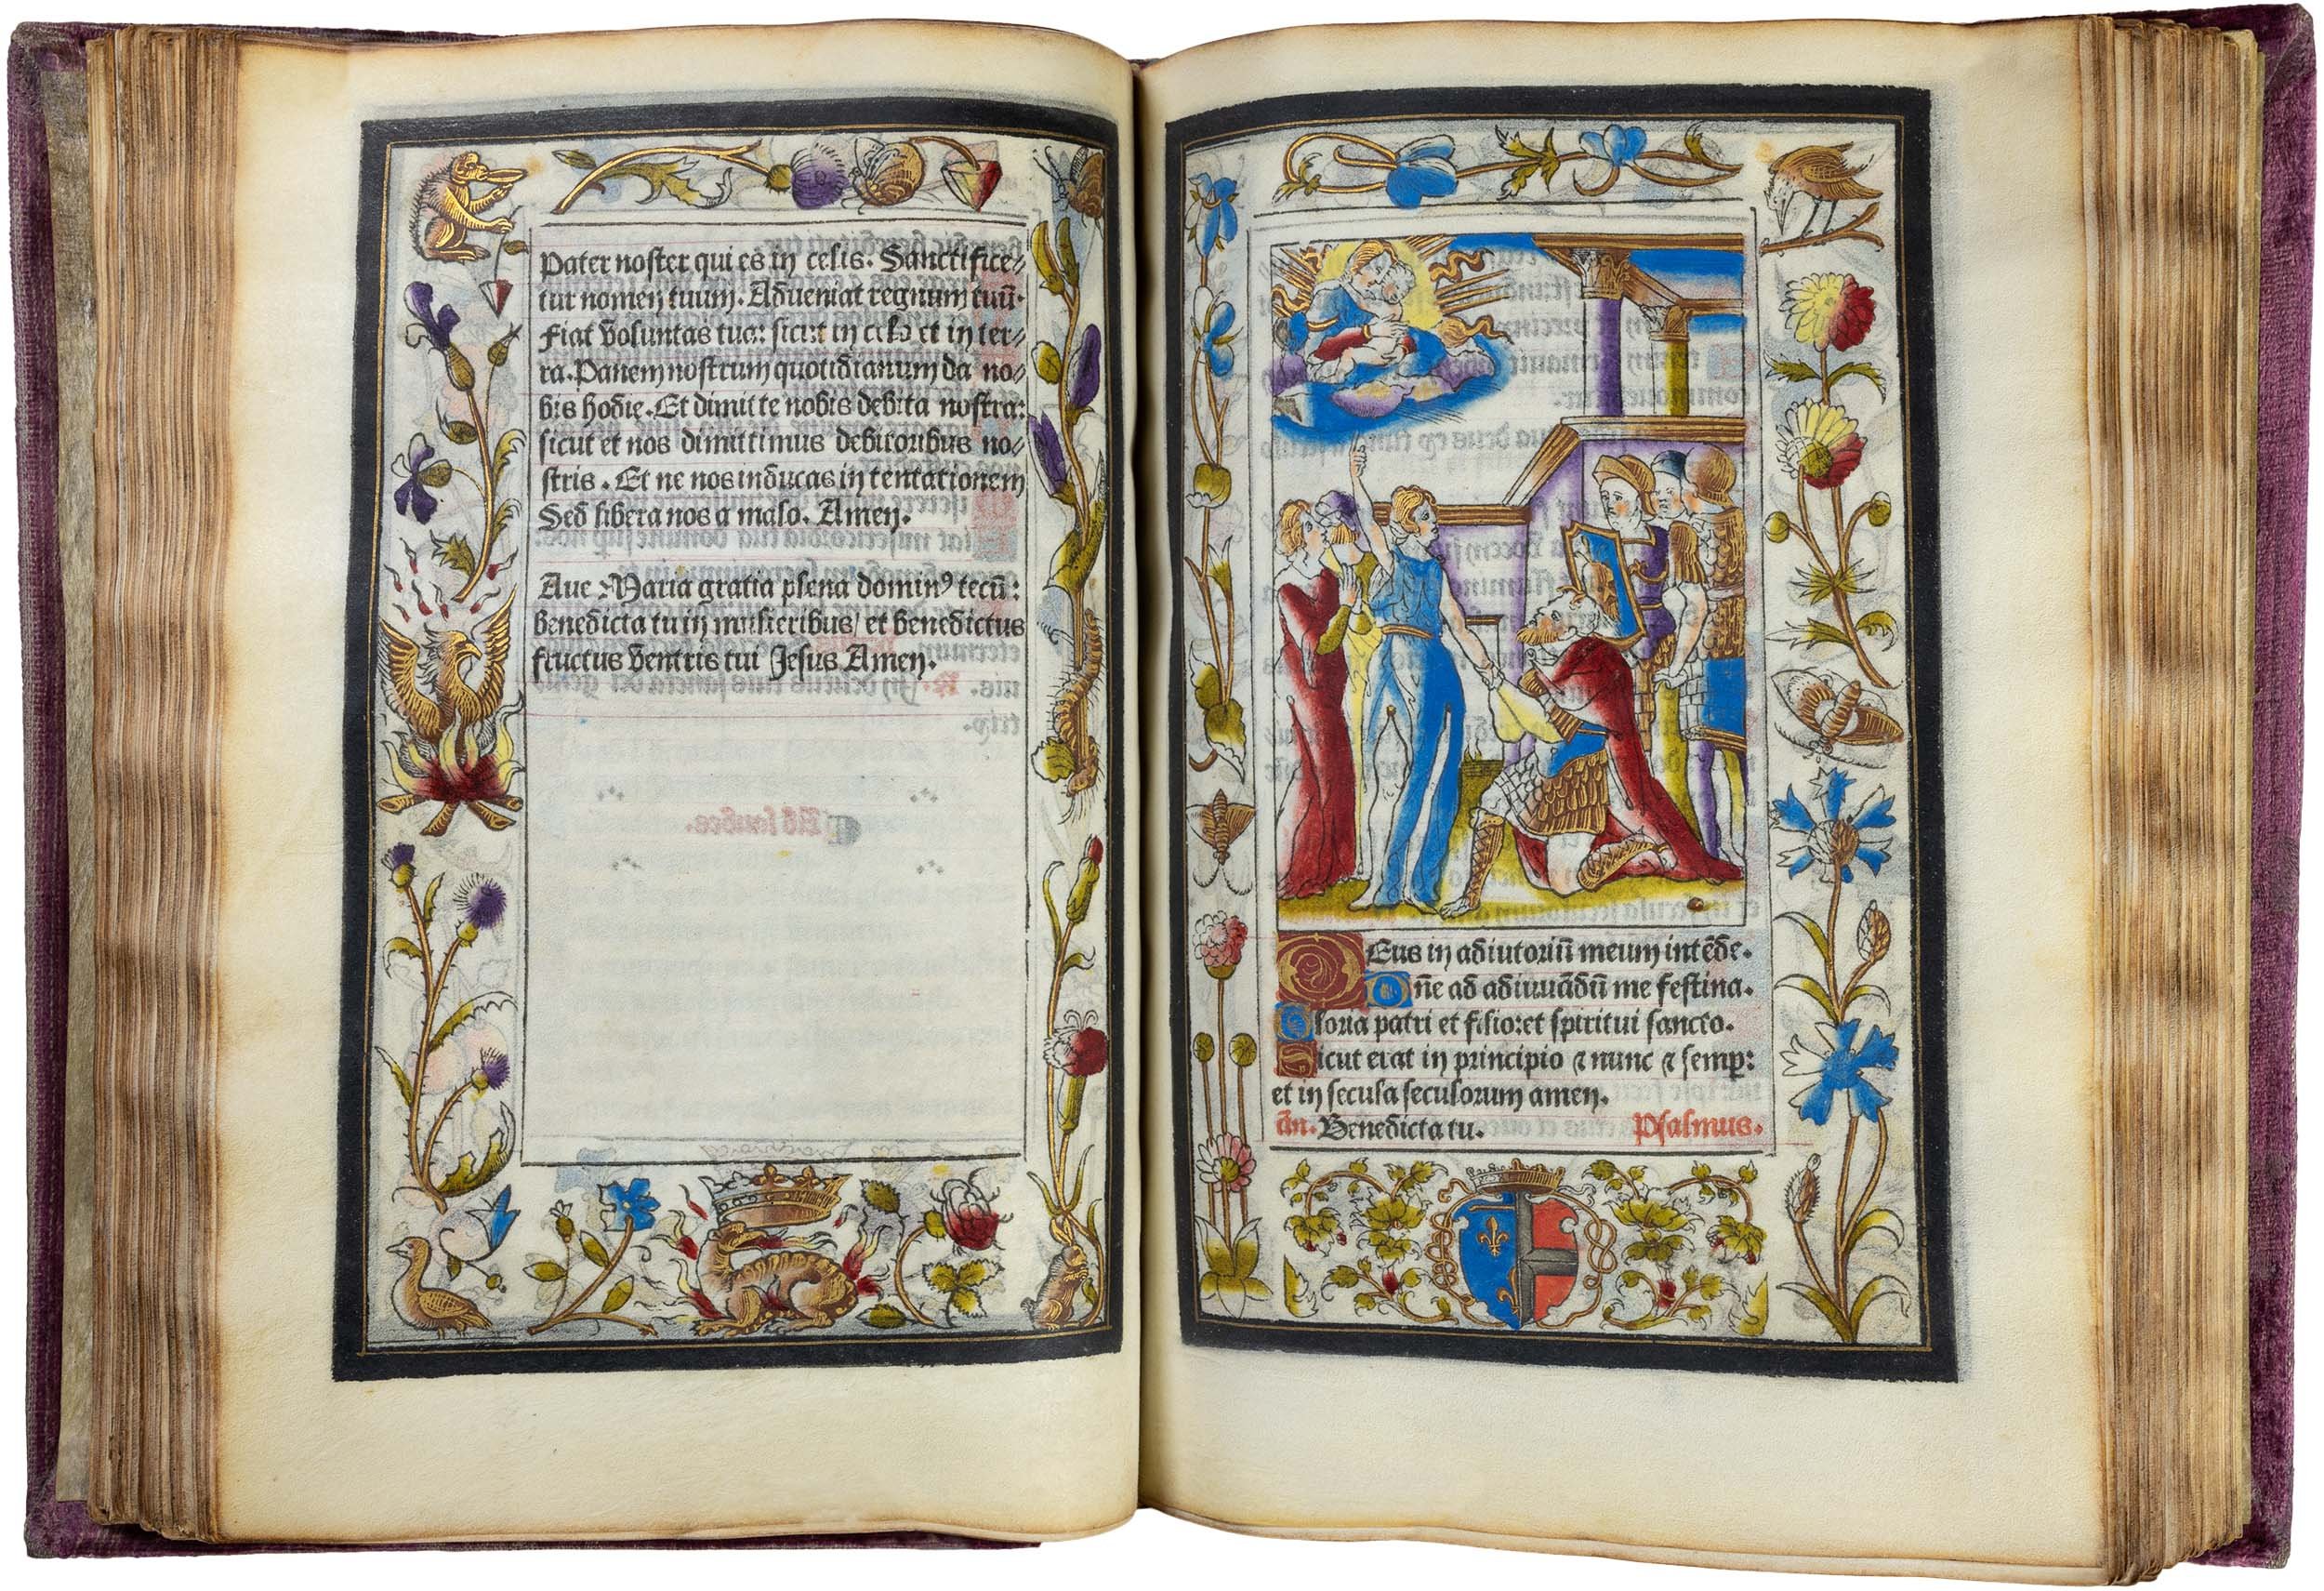 geoffroy-tory-printed-book-of-hours-illuminated-vellum-22-october-1527-prince-dessing-villeneuve-horae-bmv-58.jpg